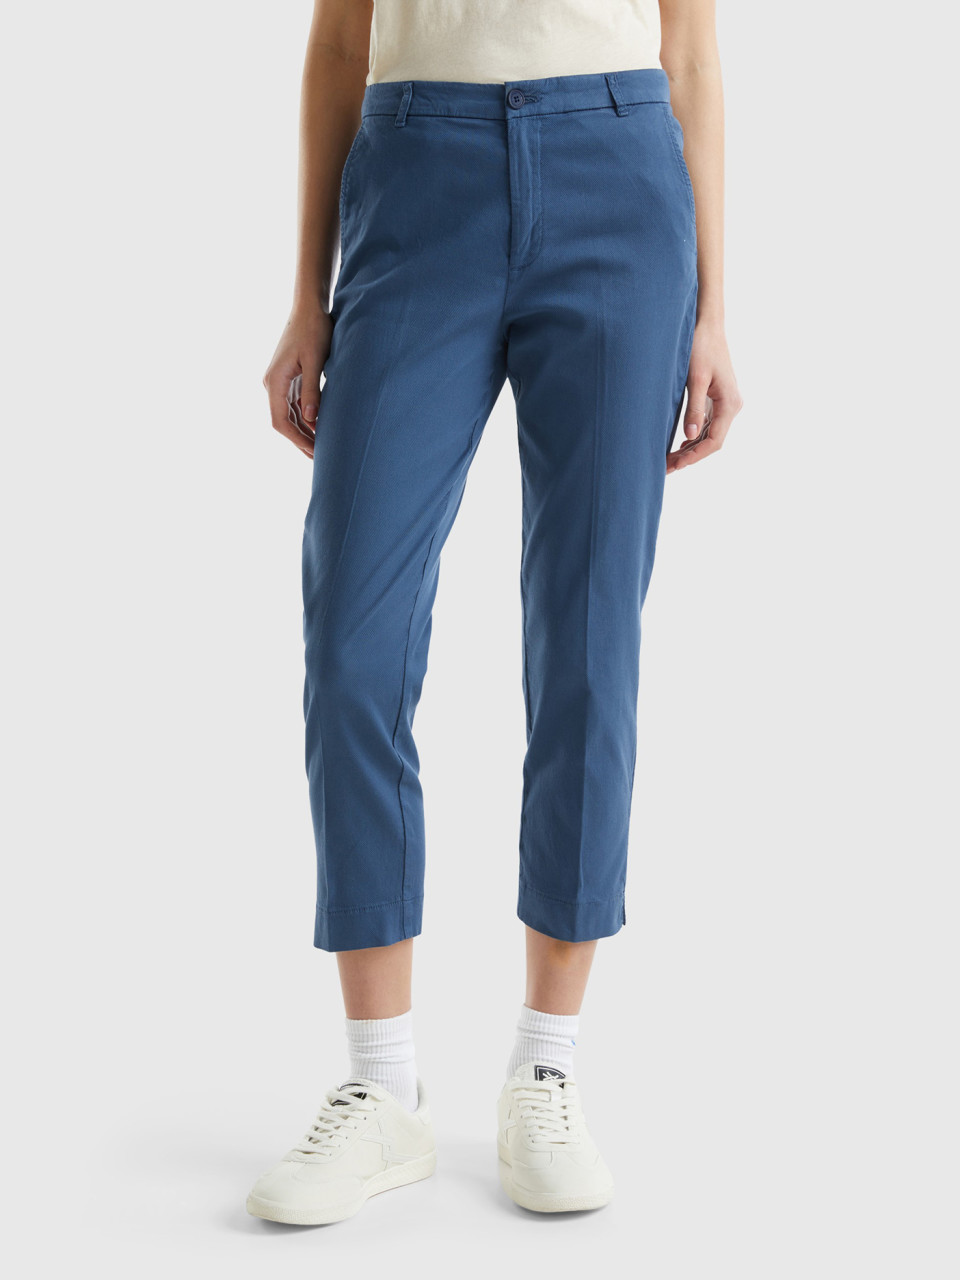 Benetton, Pantalones Chinos Cropped De Algodón Elástico, Azul Grisáceo, Mujer